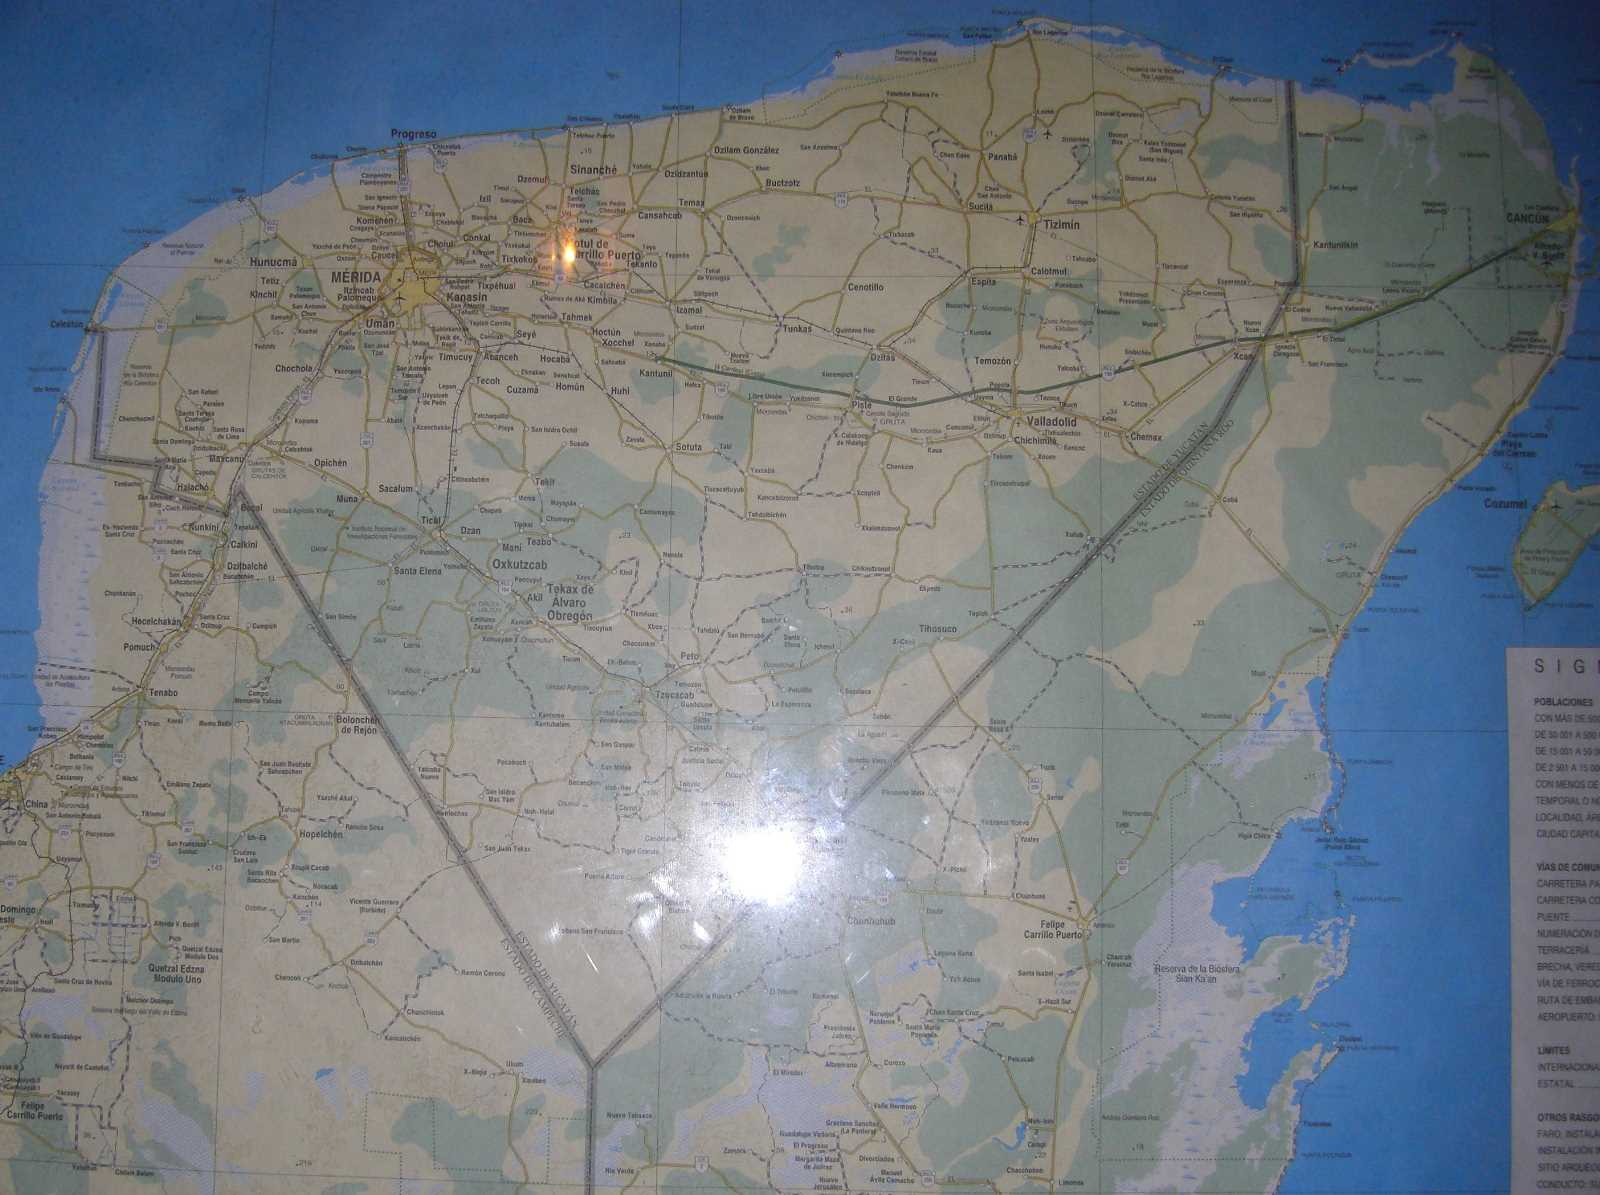 CIMG17
42 map
